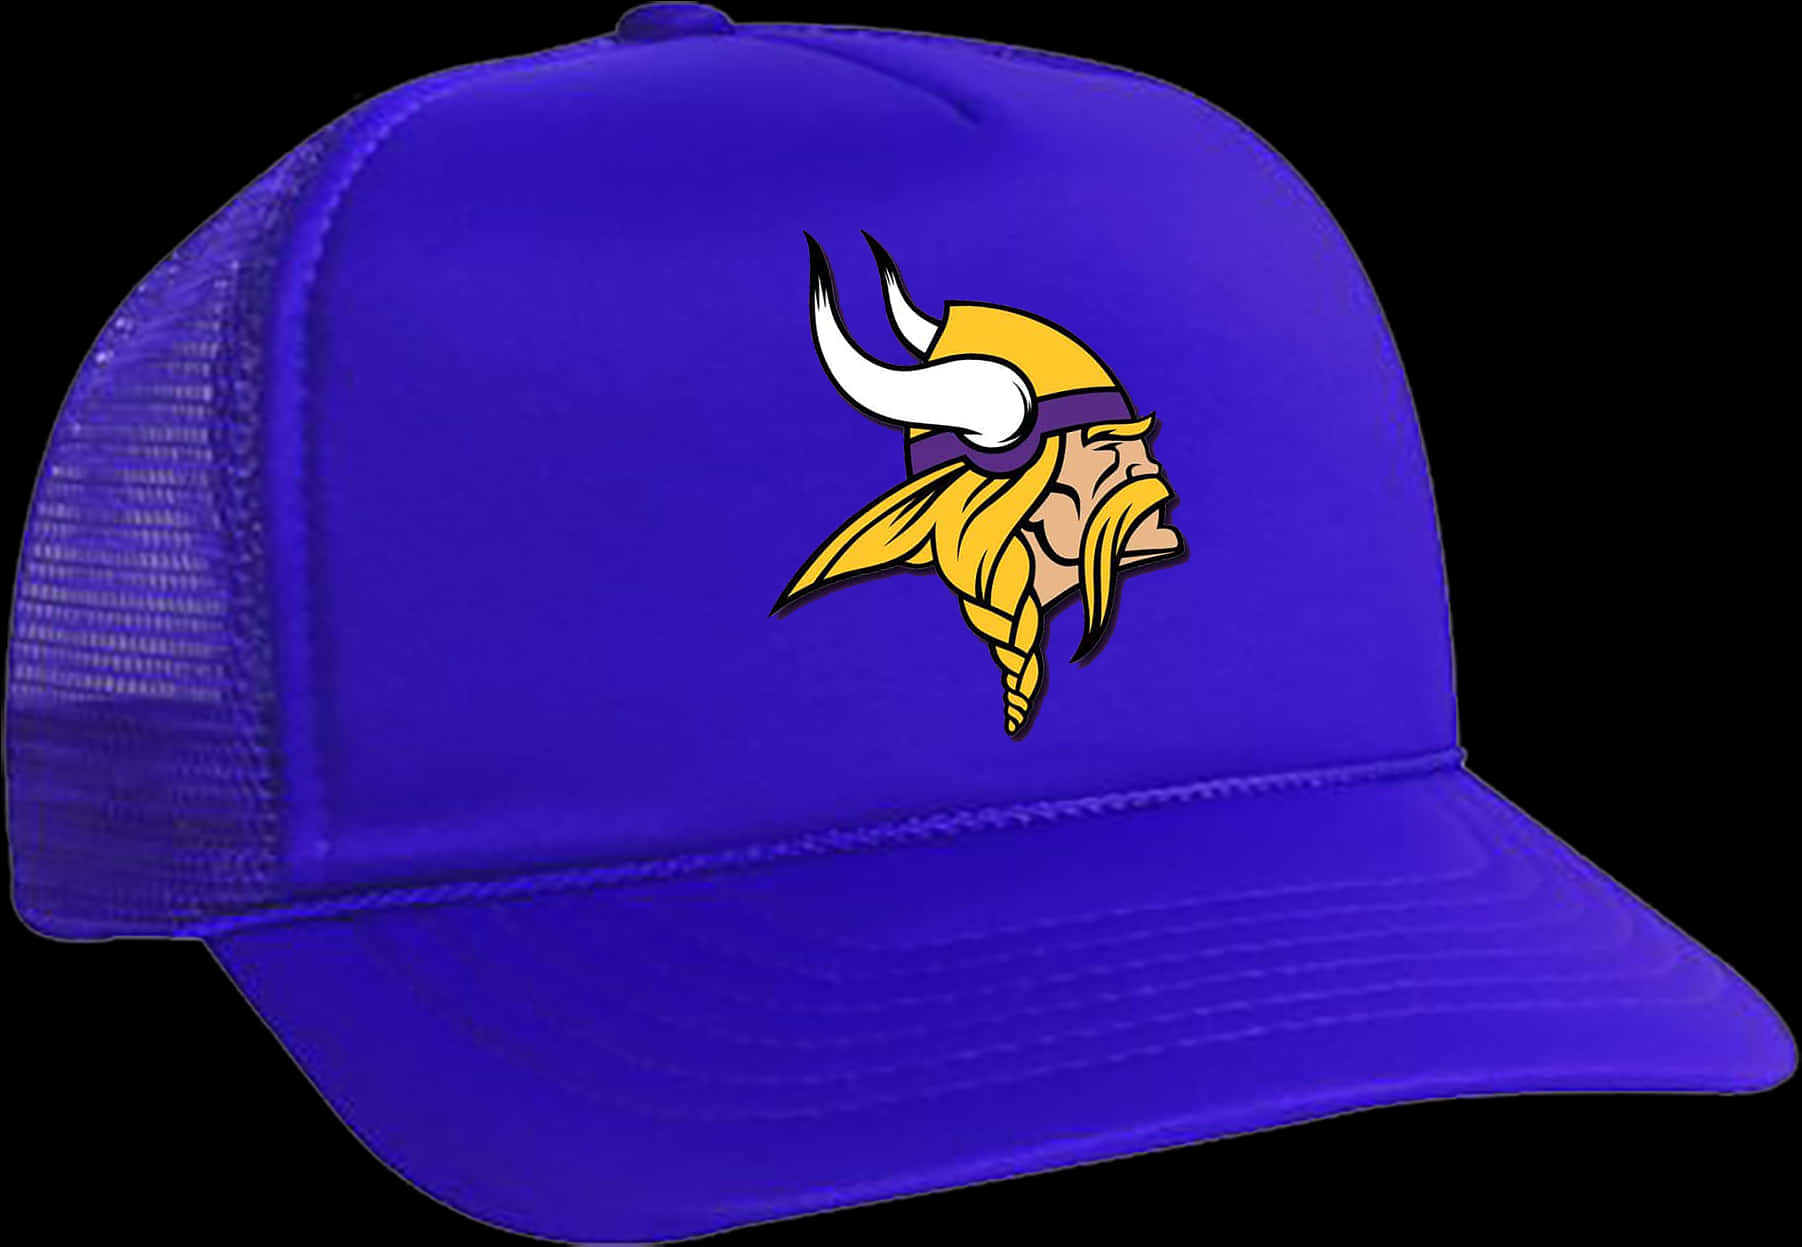 Purple Vikings Logo Cap PNG image